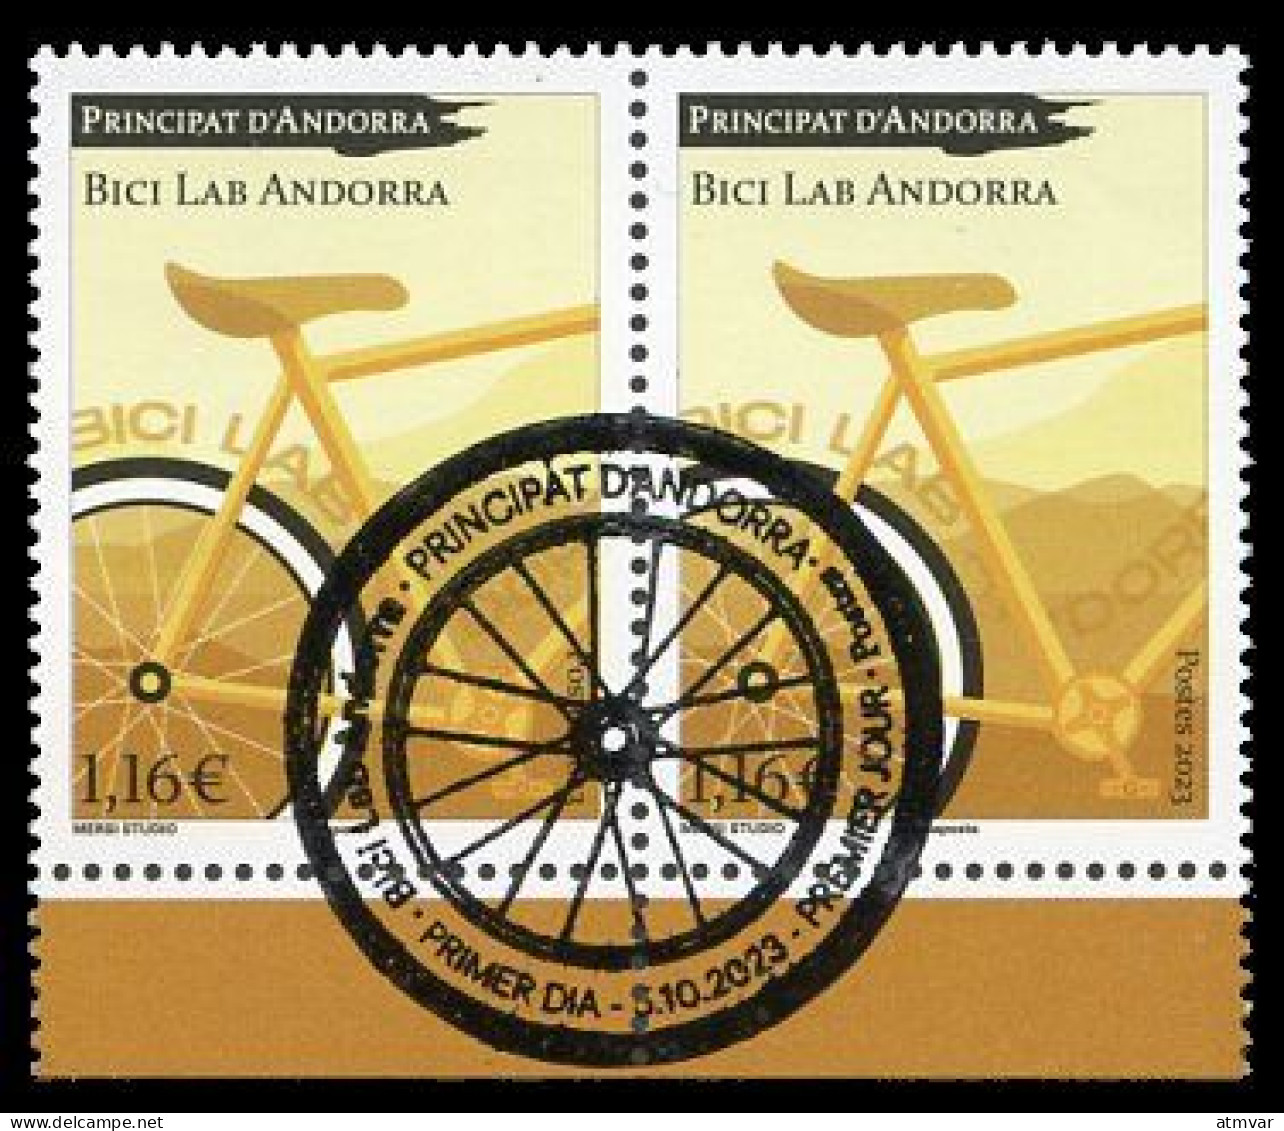 ANDORRA Postes (2023) Bici Lab Andorra, Bicicleta, Bicyclette, Bicycle, Fahrrad, Fiets - First Day - Usados